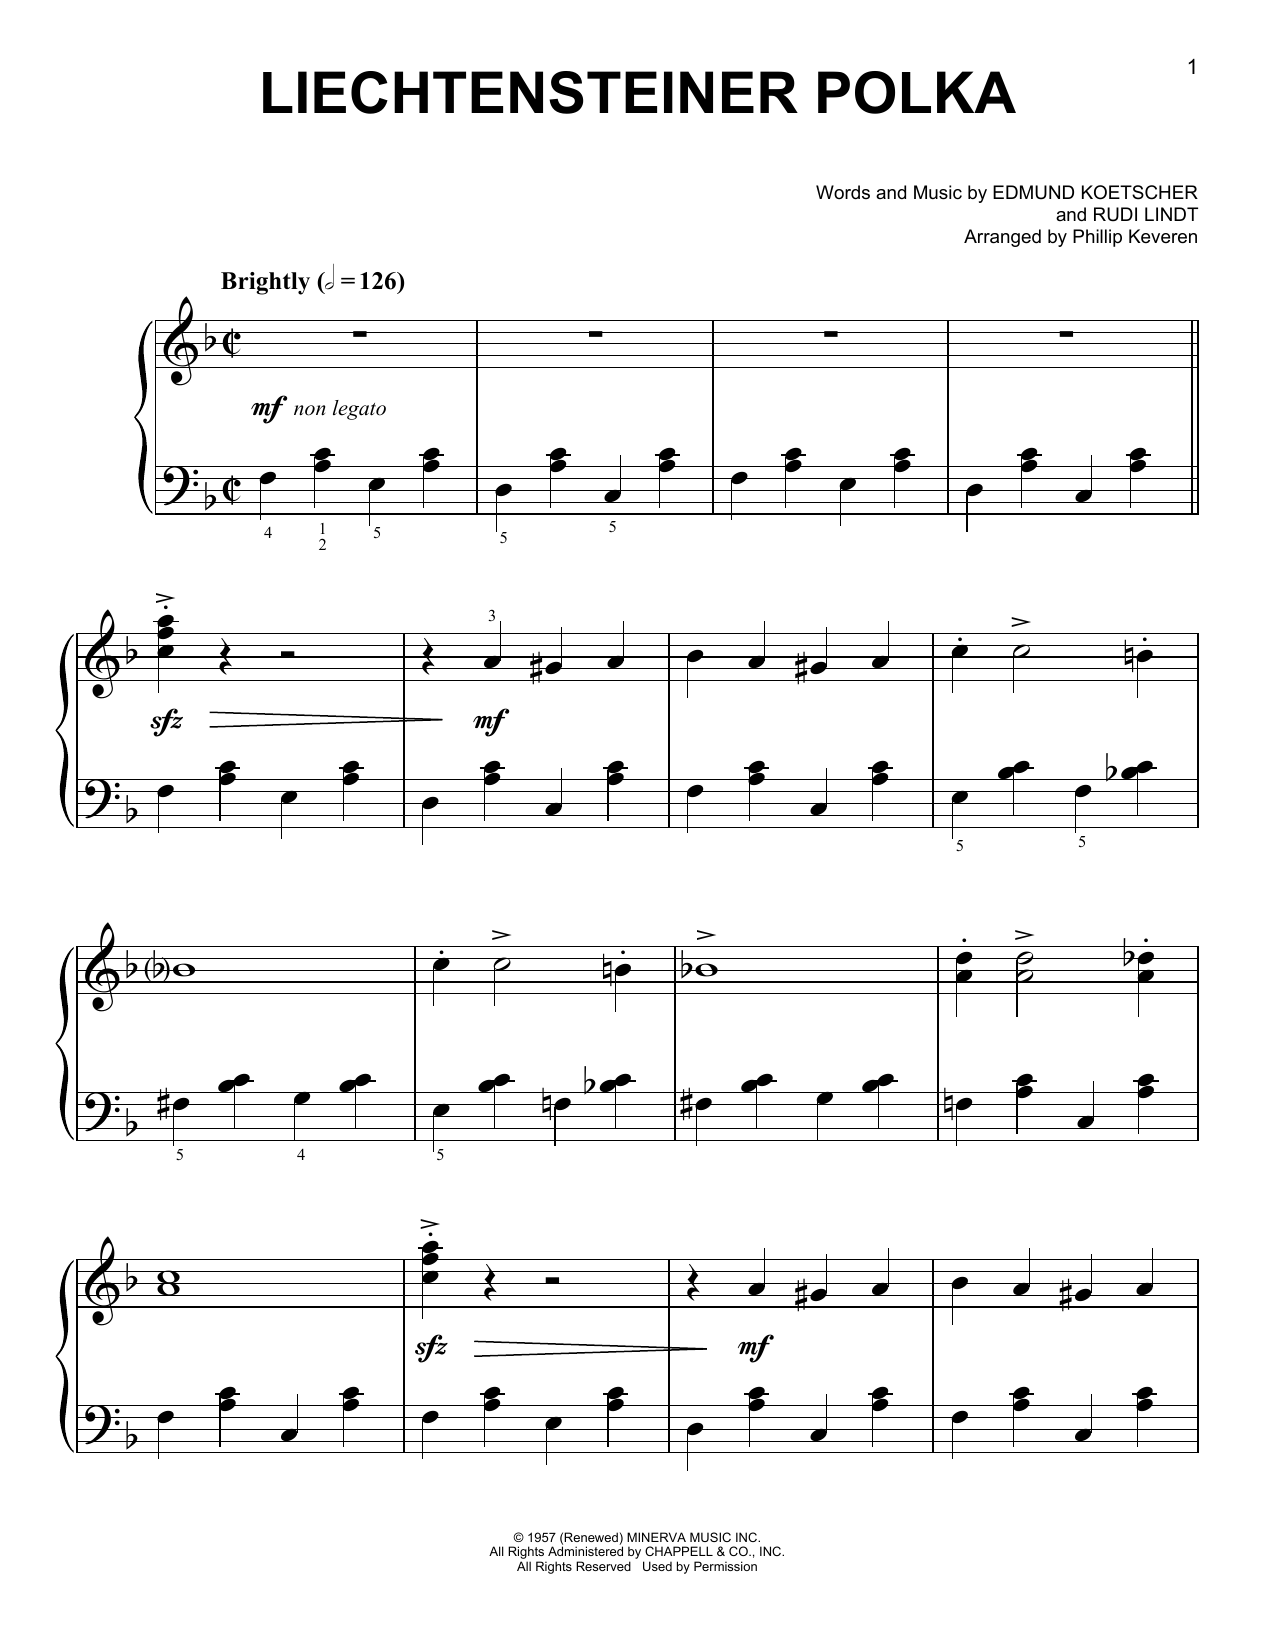 Edmund Koetscher Liechtensteiner Polka [Classical version] (arr. Phillip Keveren) Sheet Music Notes & Chords for Easy Piano - Download or Print PDF